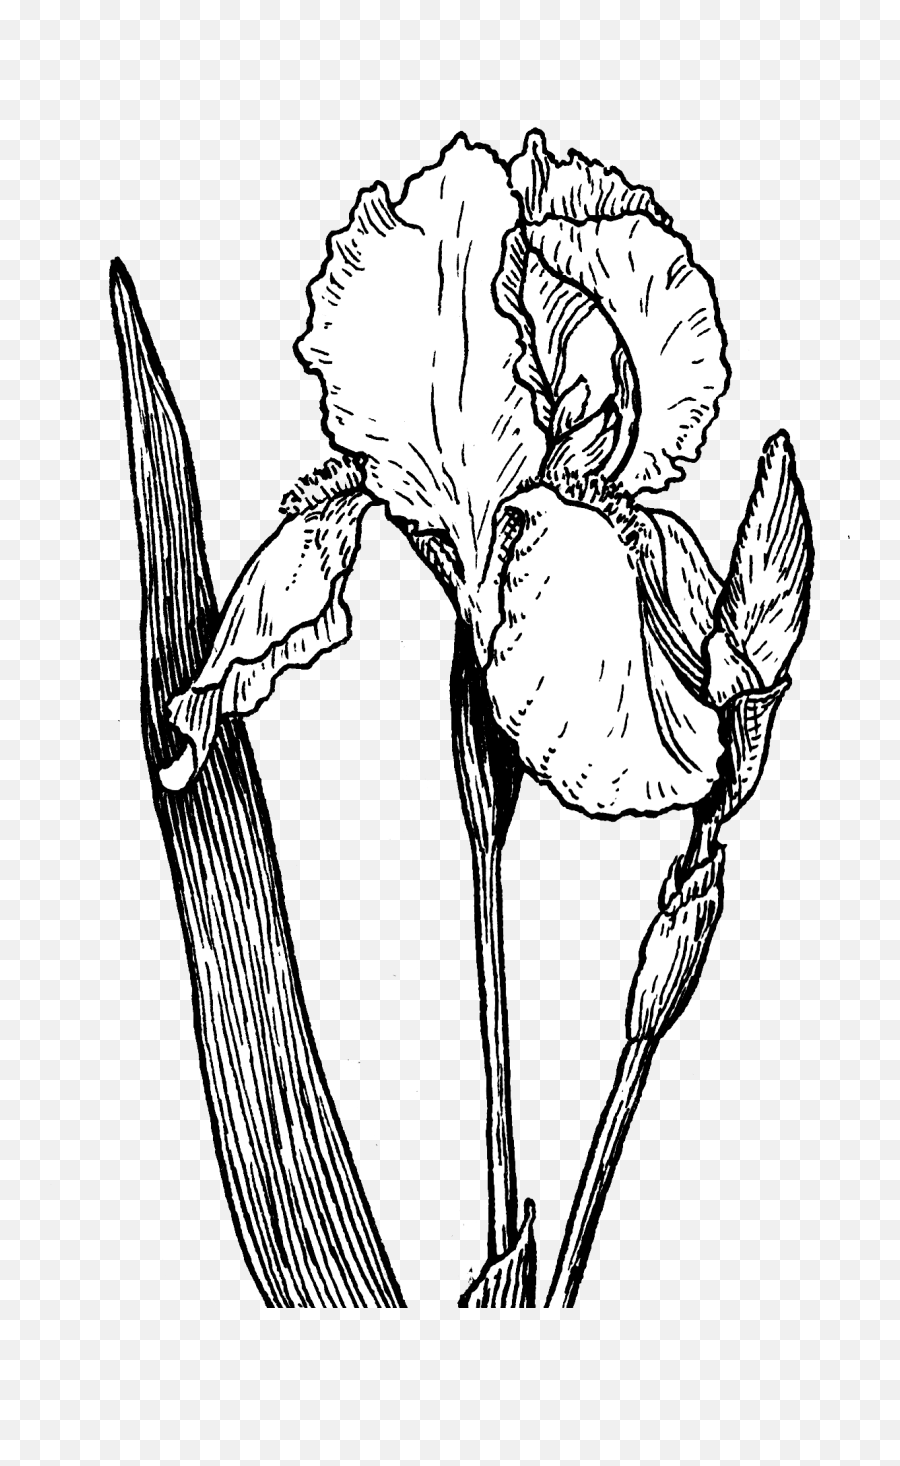 Fileiris - Plant Psfpng Wikimedia Commons Iris Flower Drawing Png,Iris Flower Png